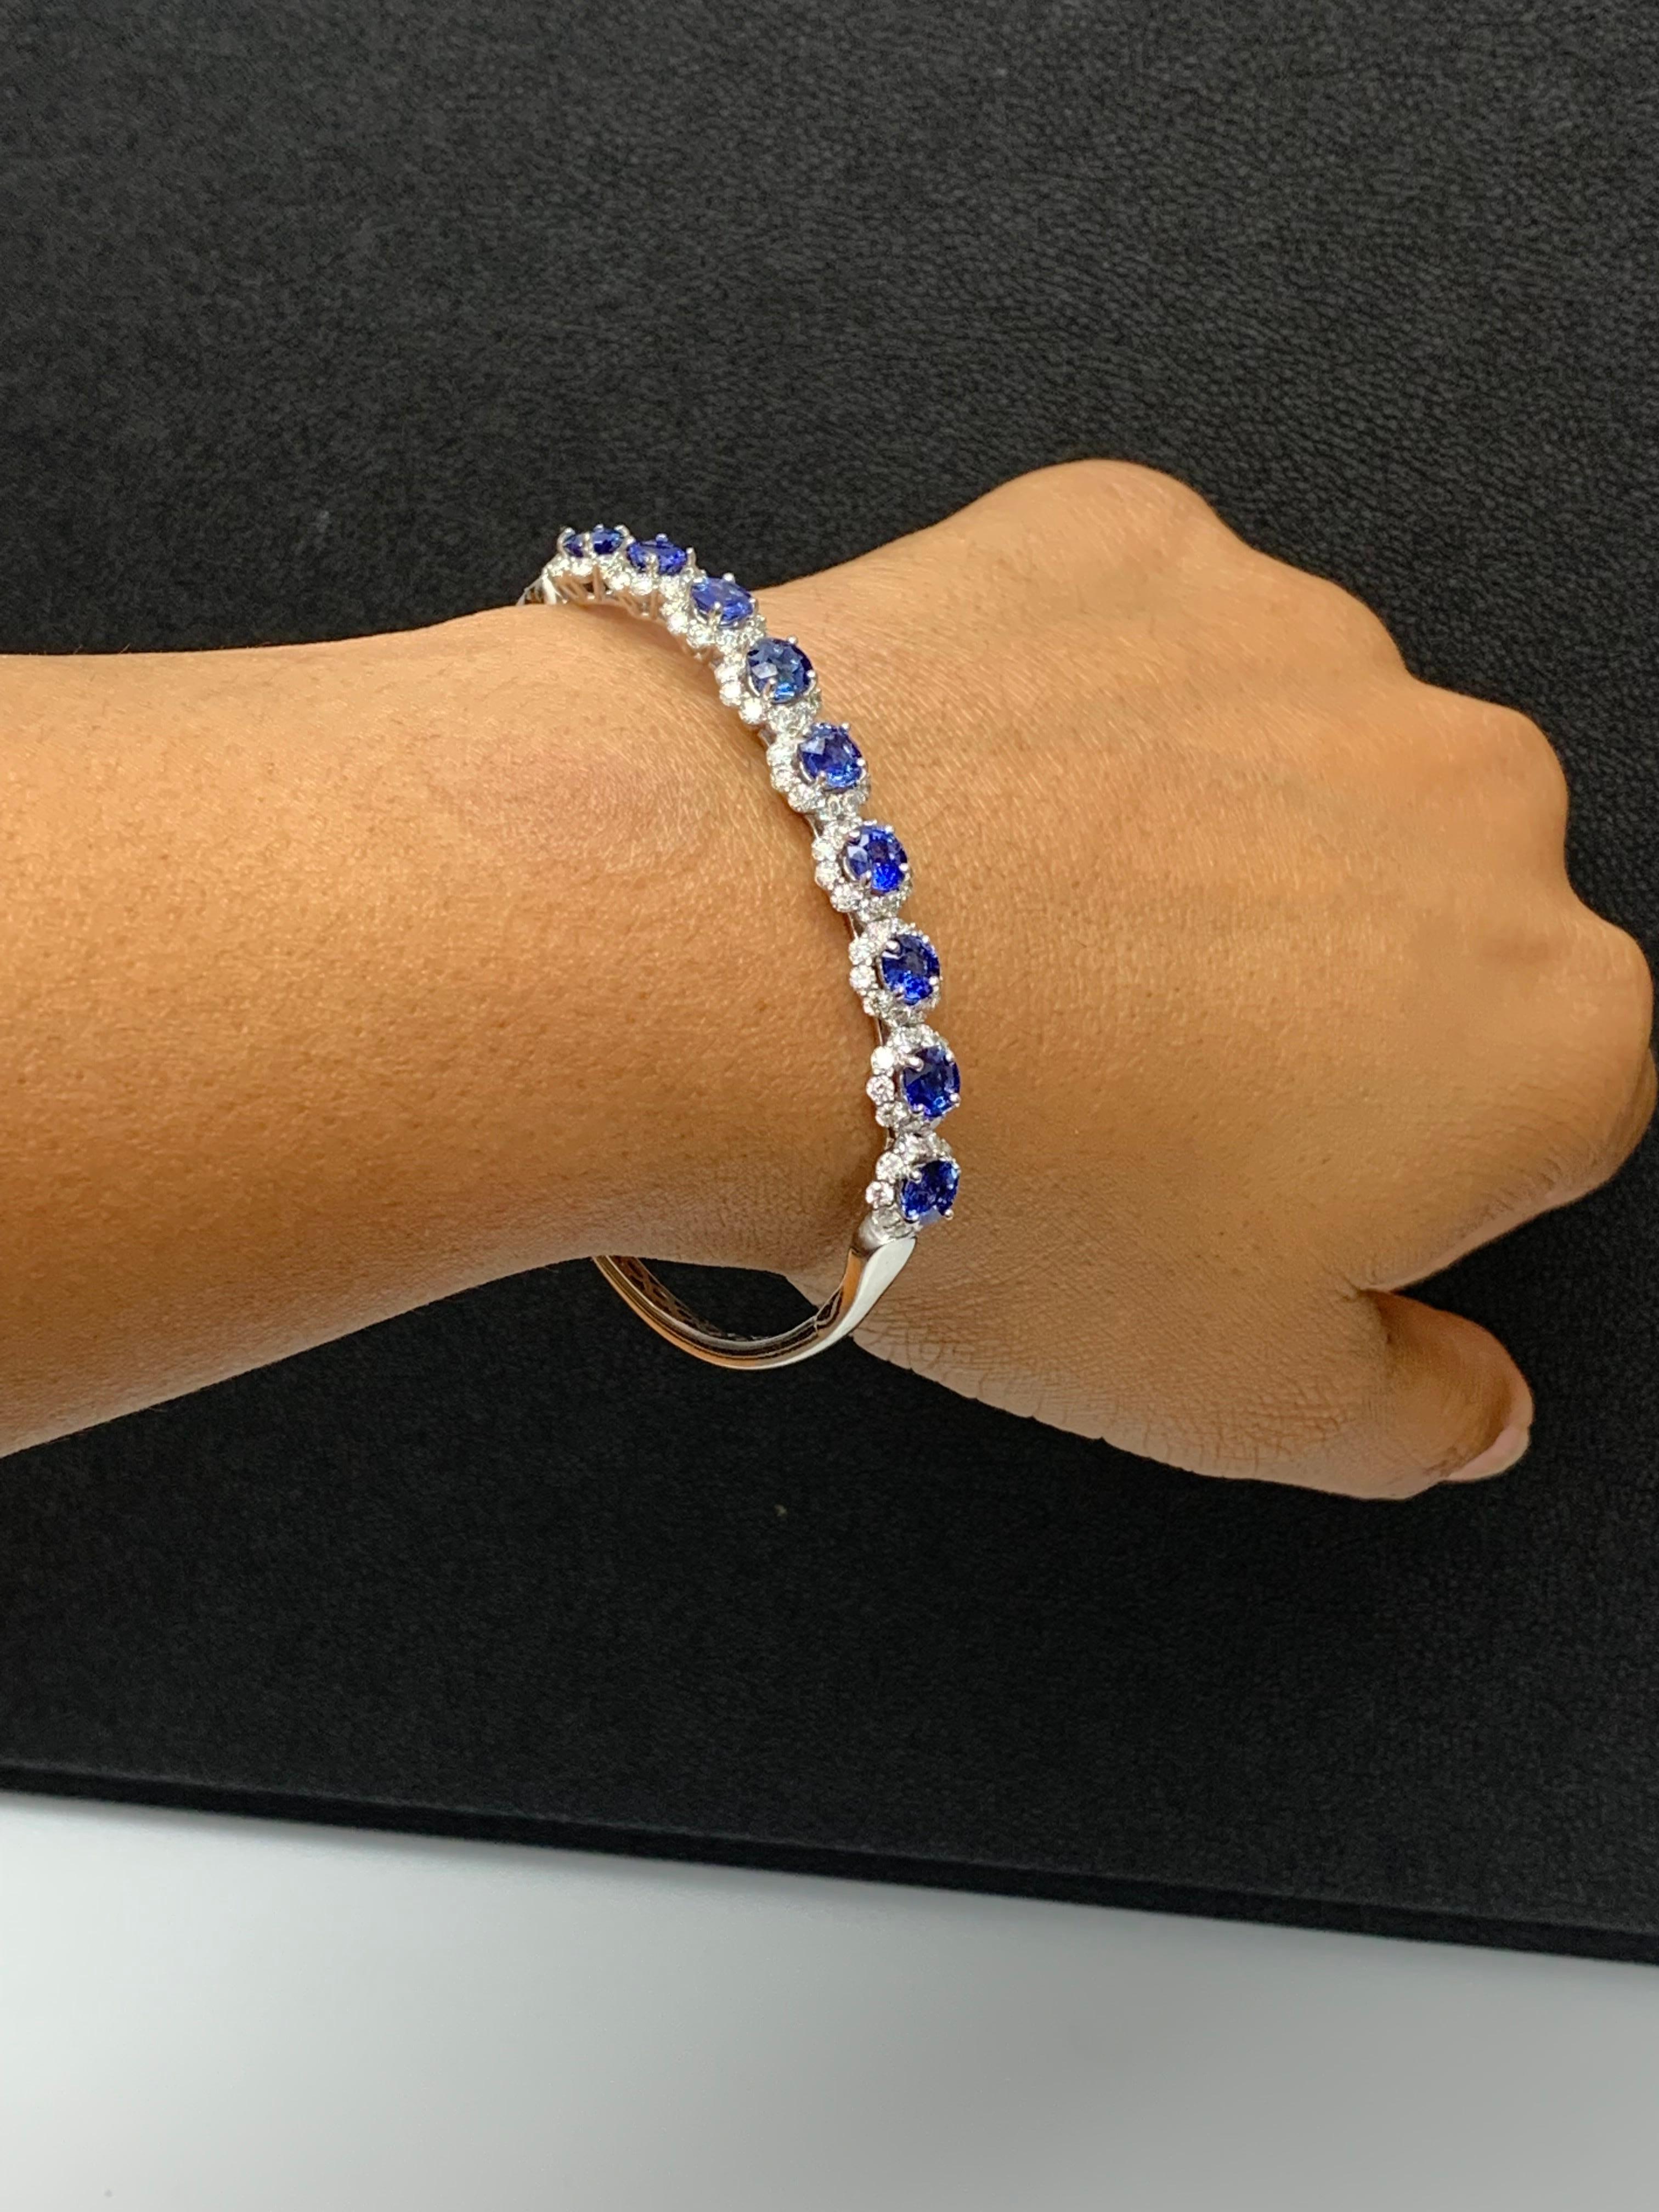 4.88 Carat Brilliant Cut Blue Sapphire Diamond Bangle Bracelet in 18k White Gold For Sale 3